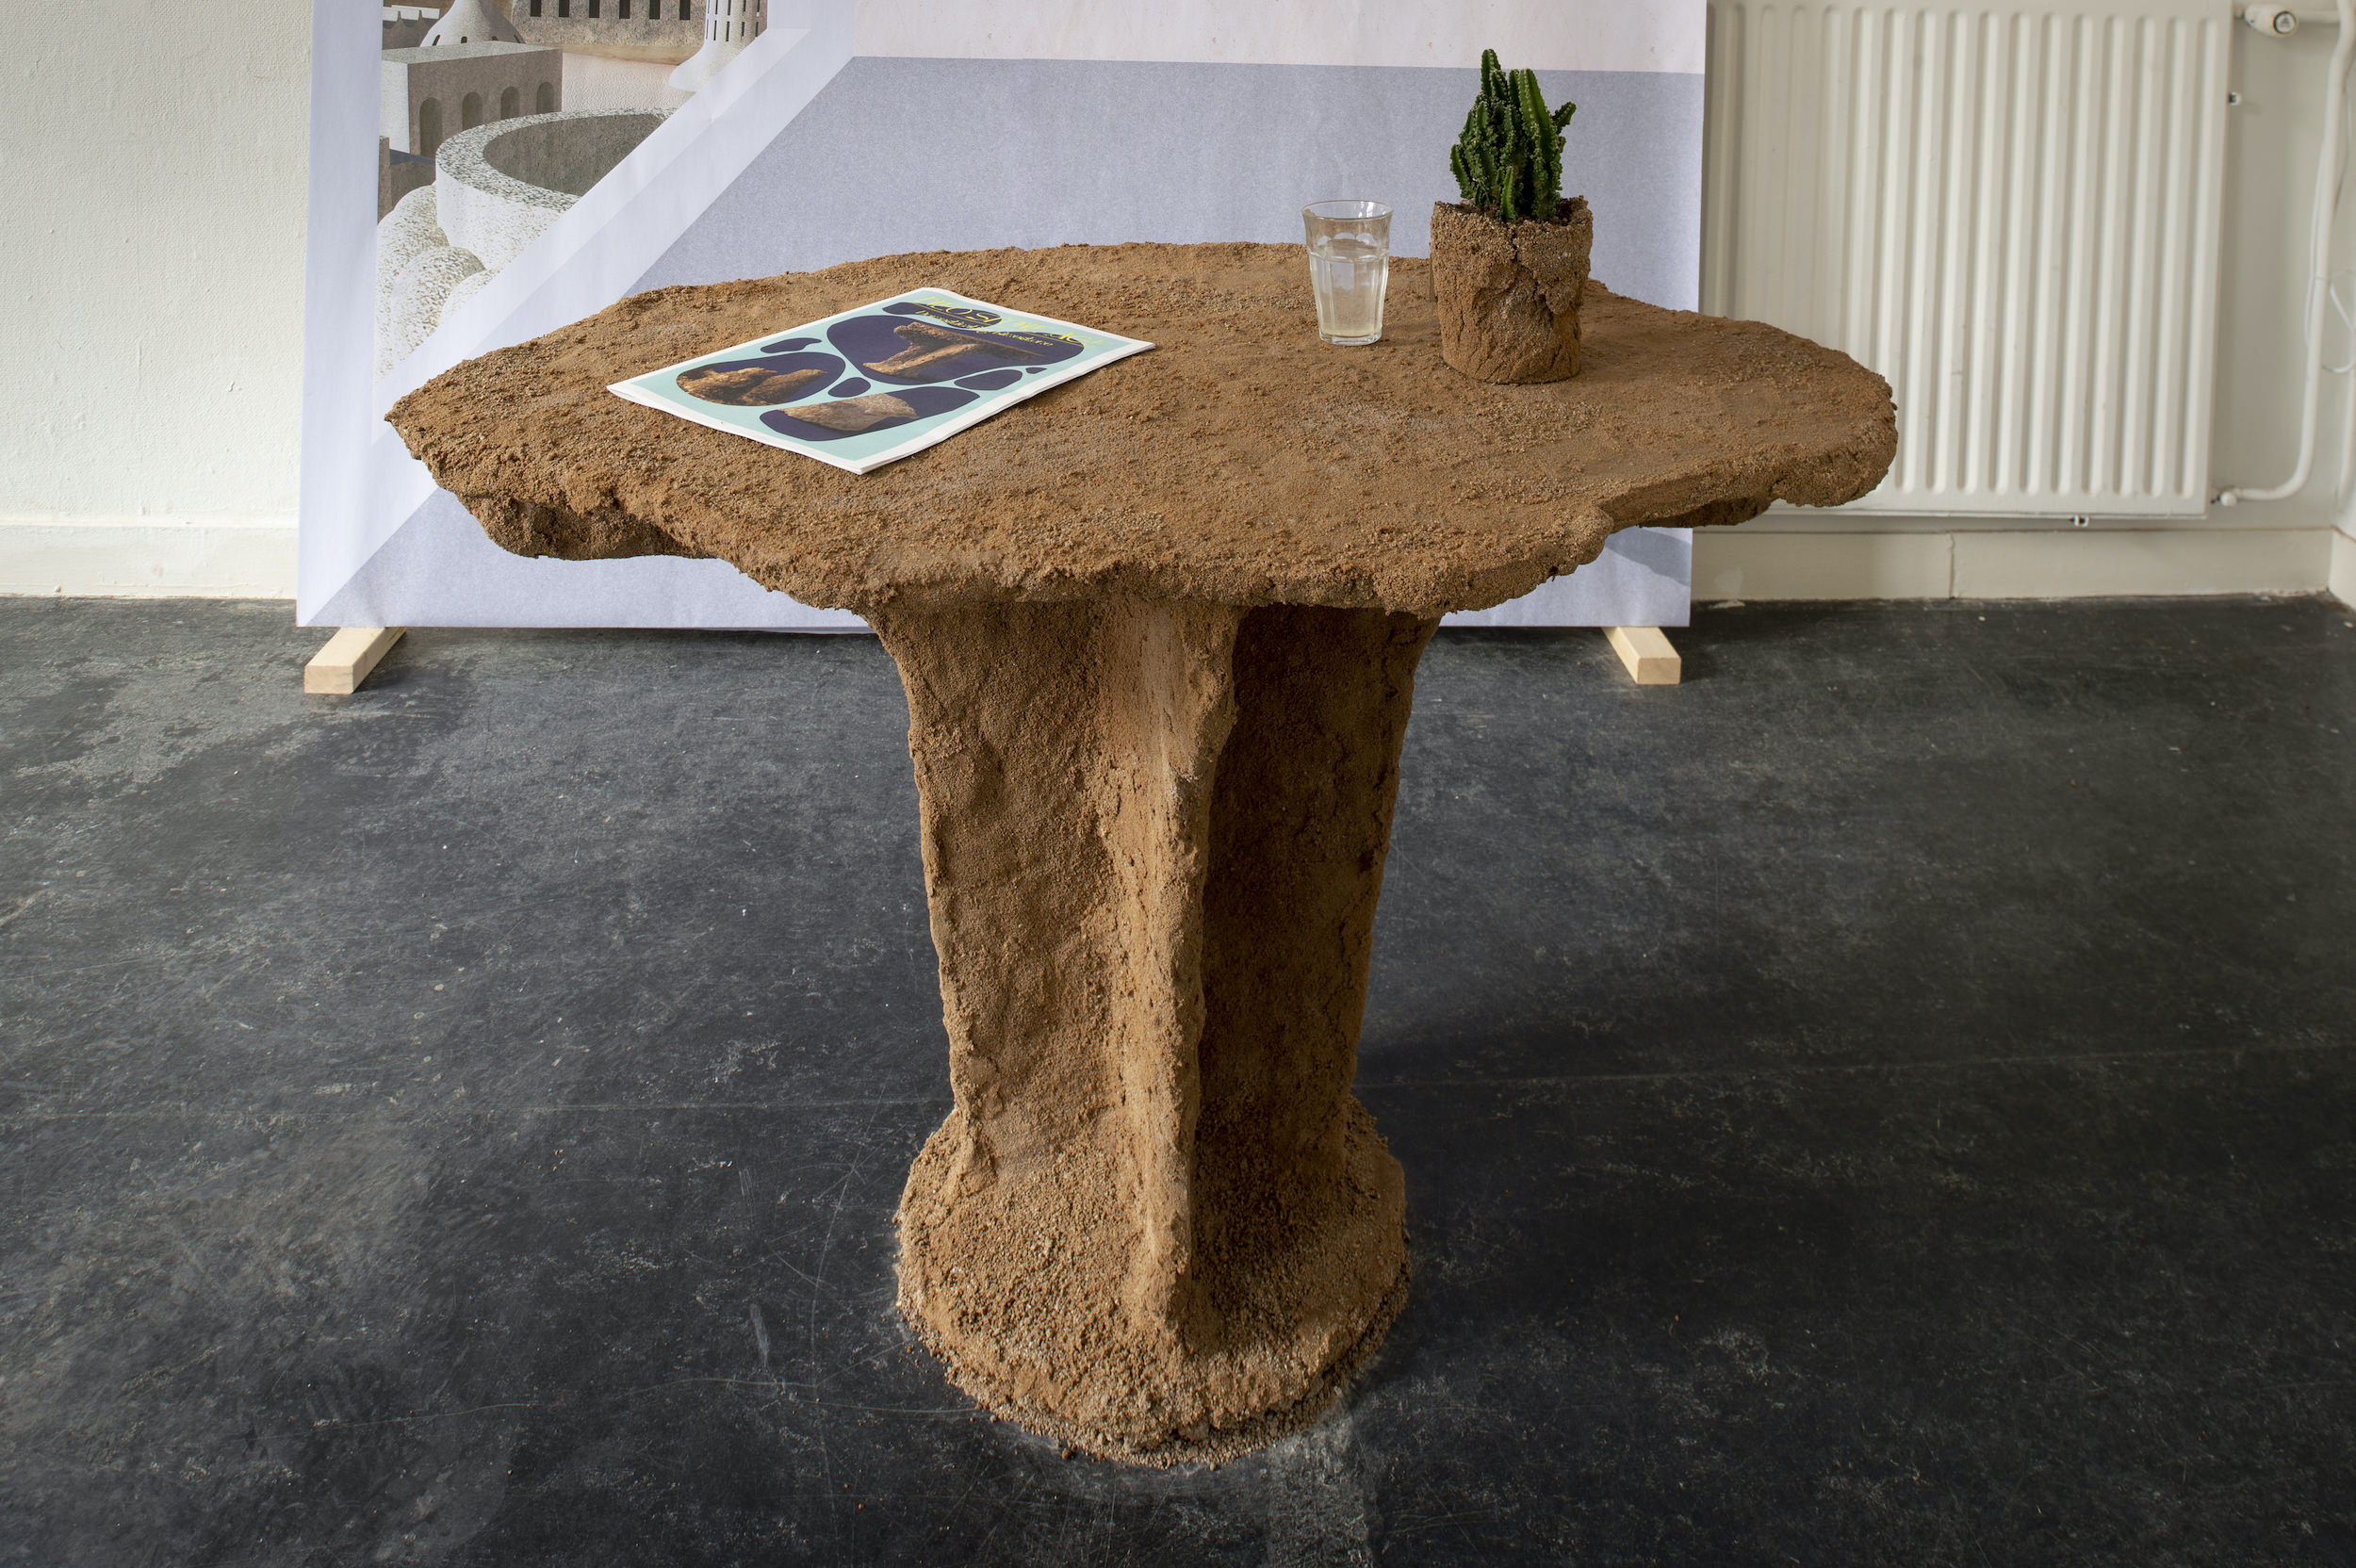 A table